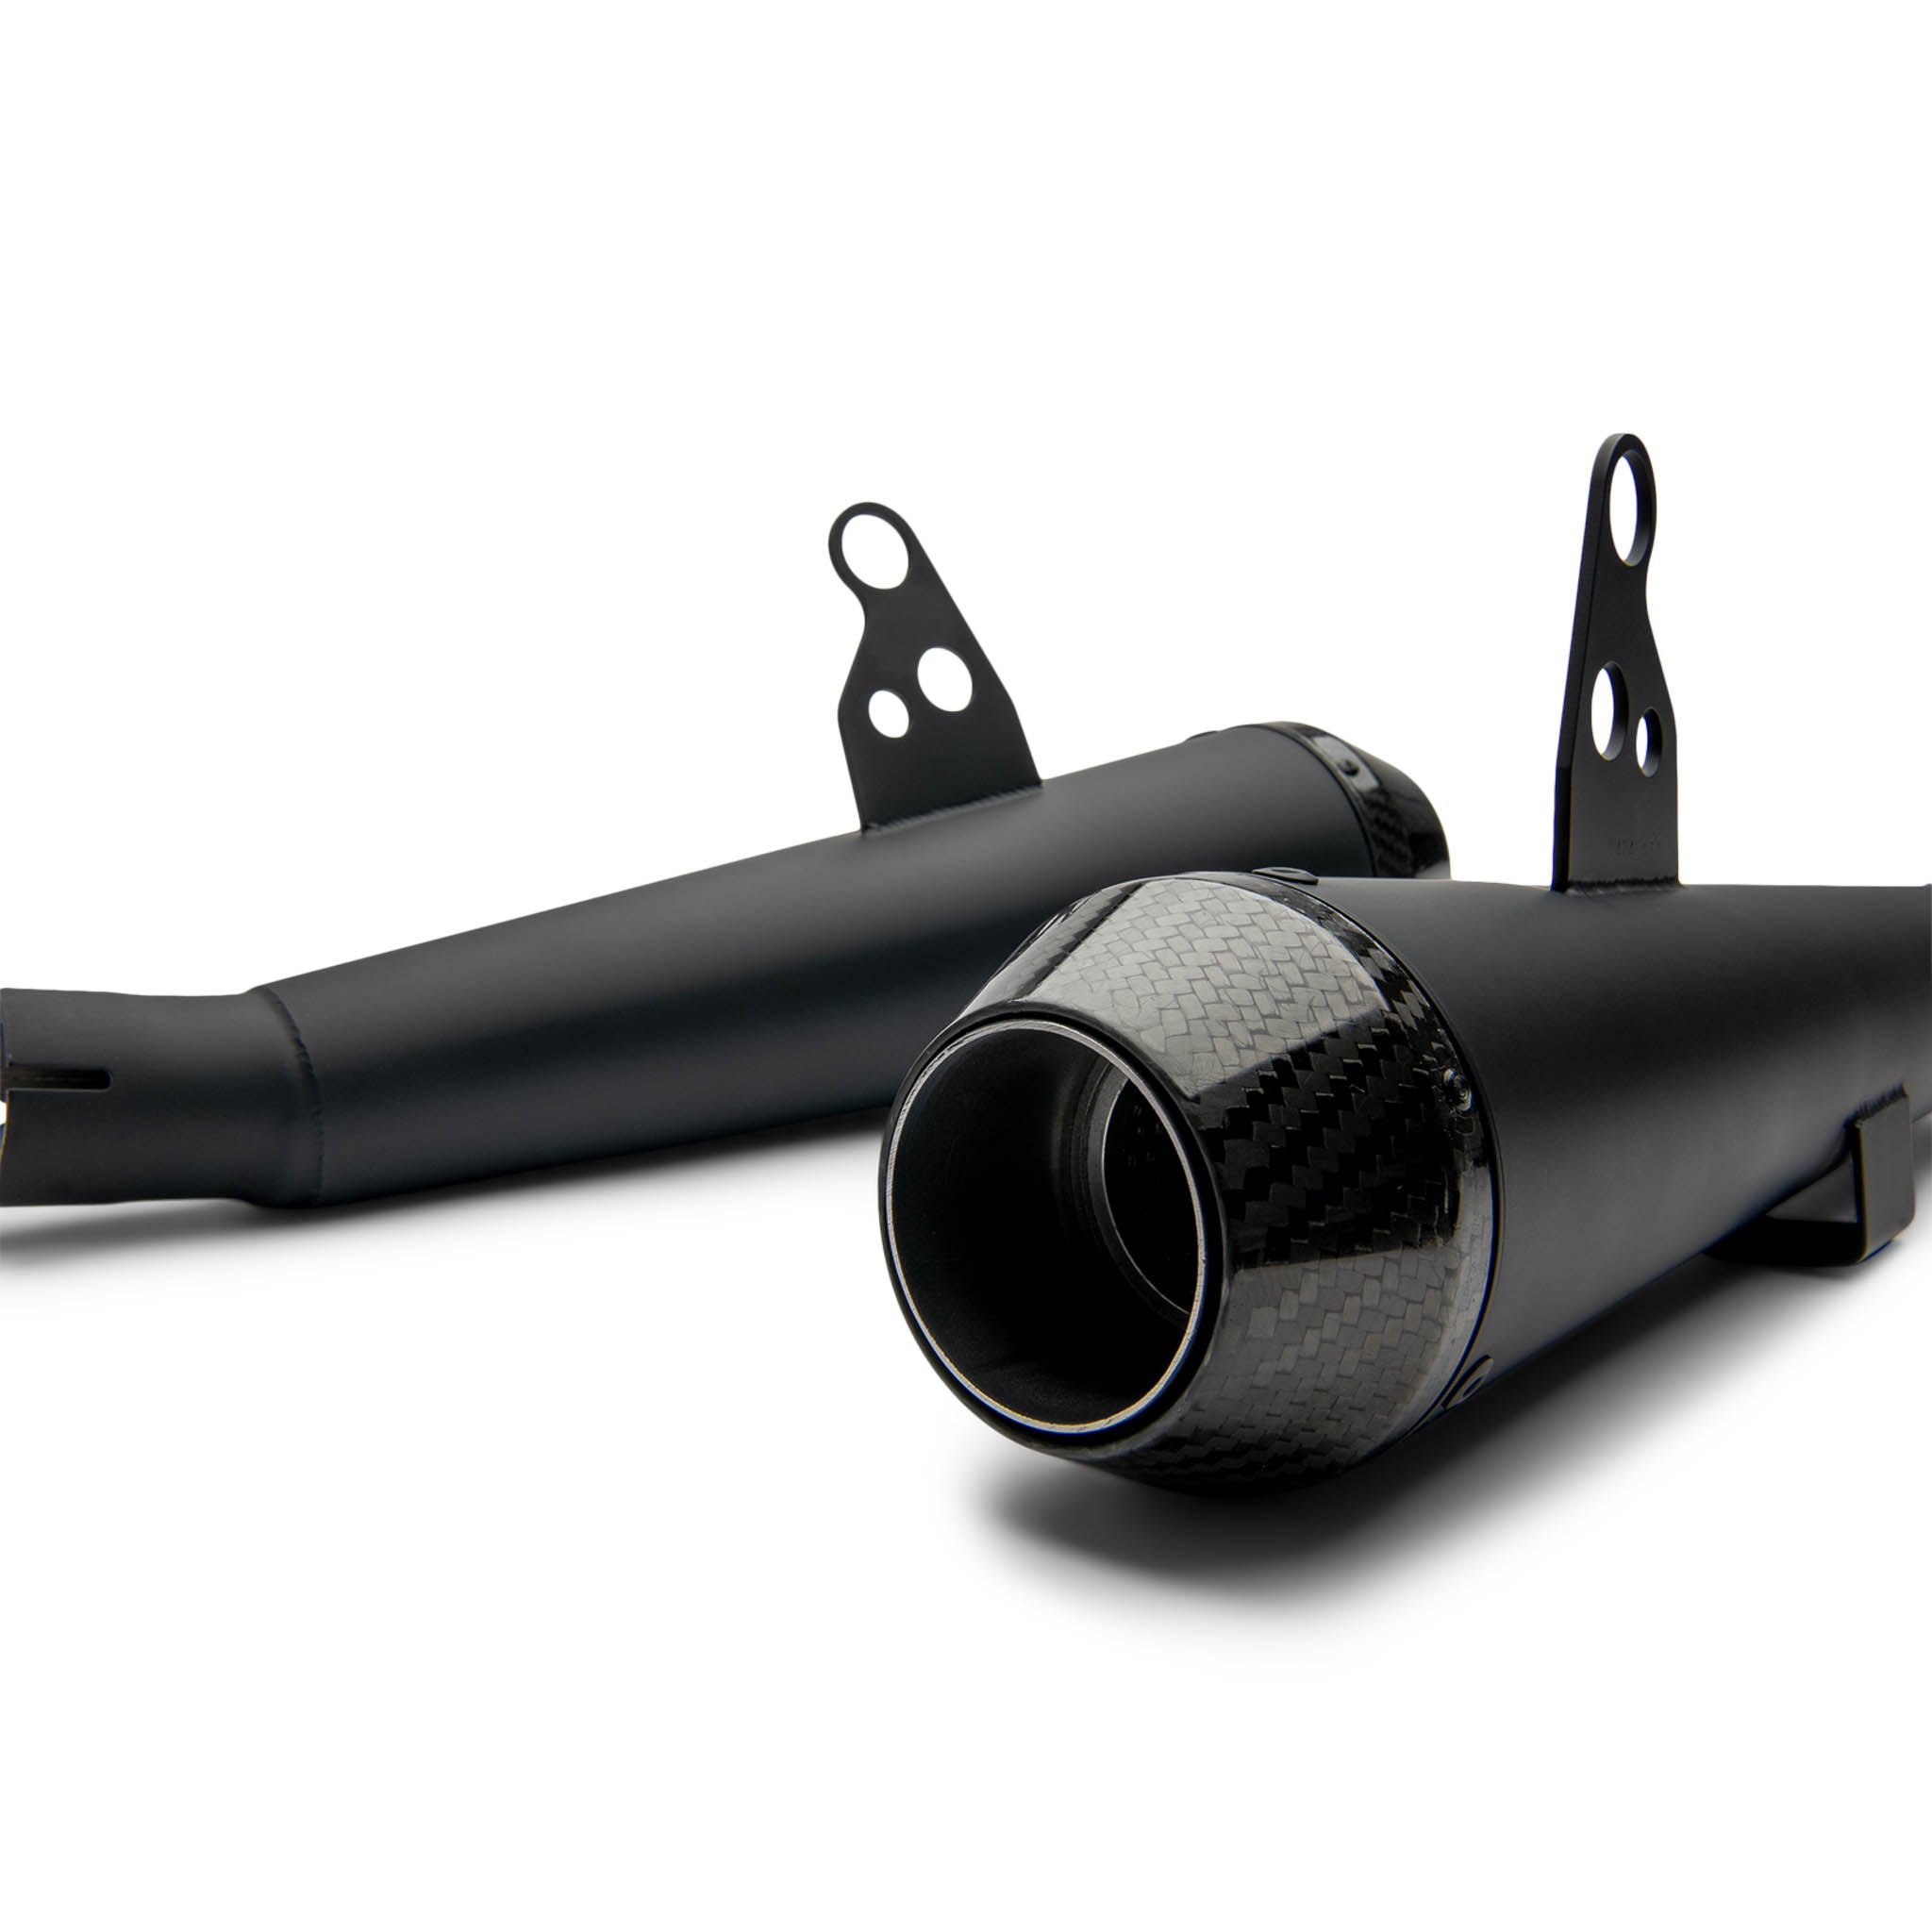 3.5 Predator Carbon Slip On Exhaust for Triumph Bonneville T100 & T120 | Cerakote Black